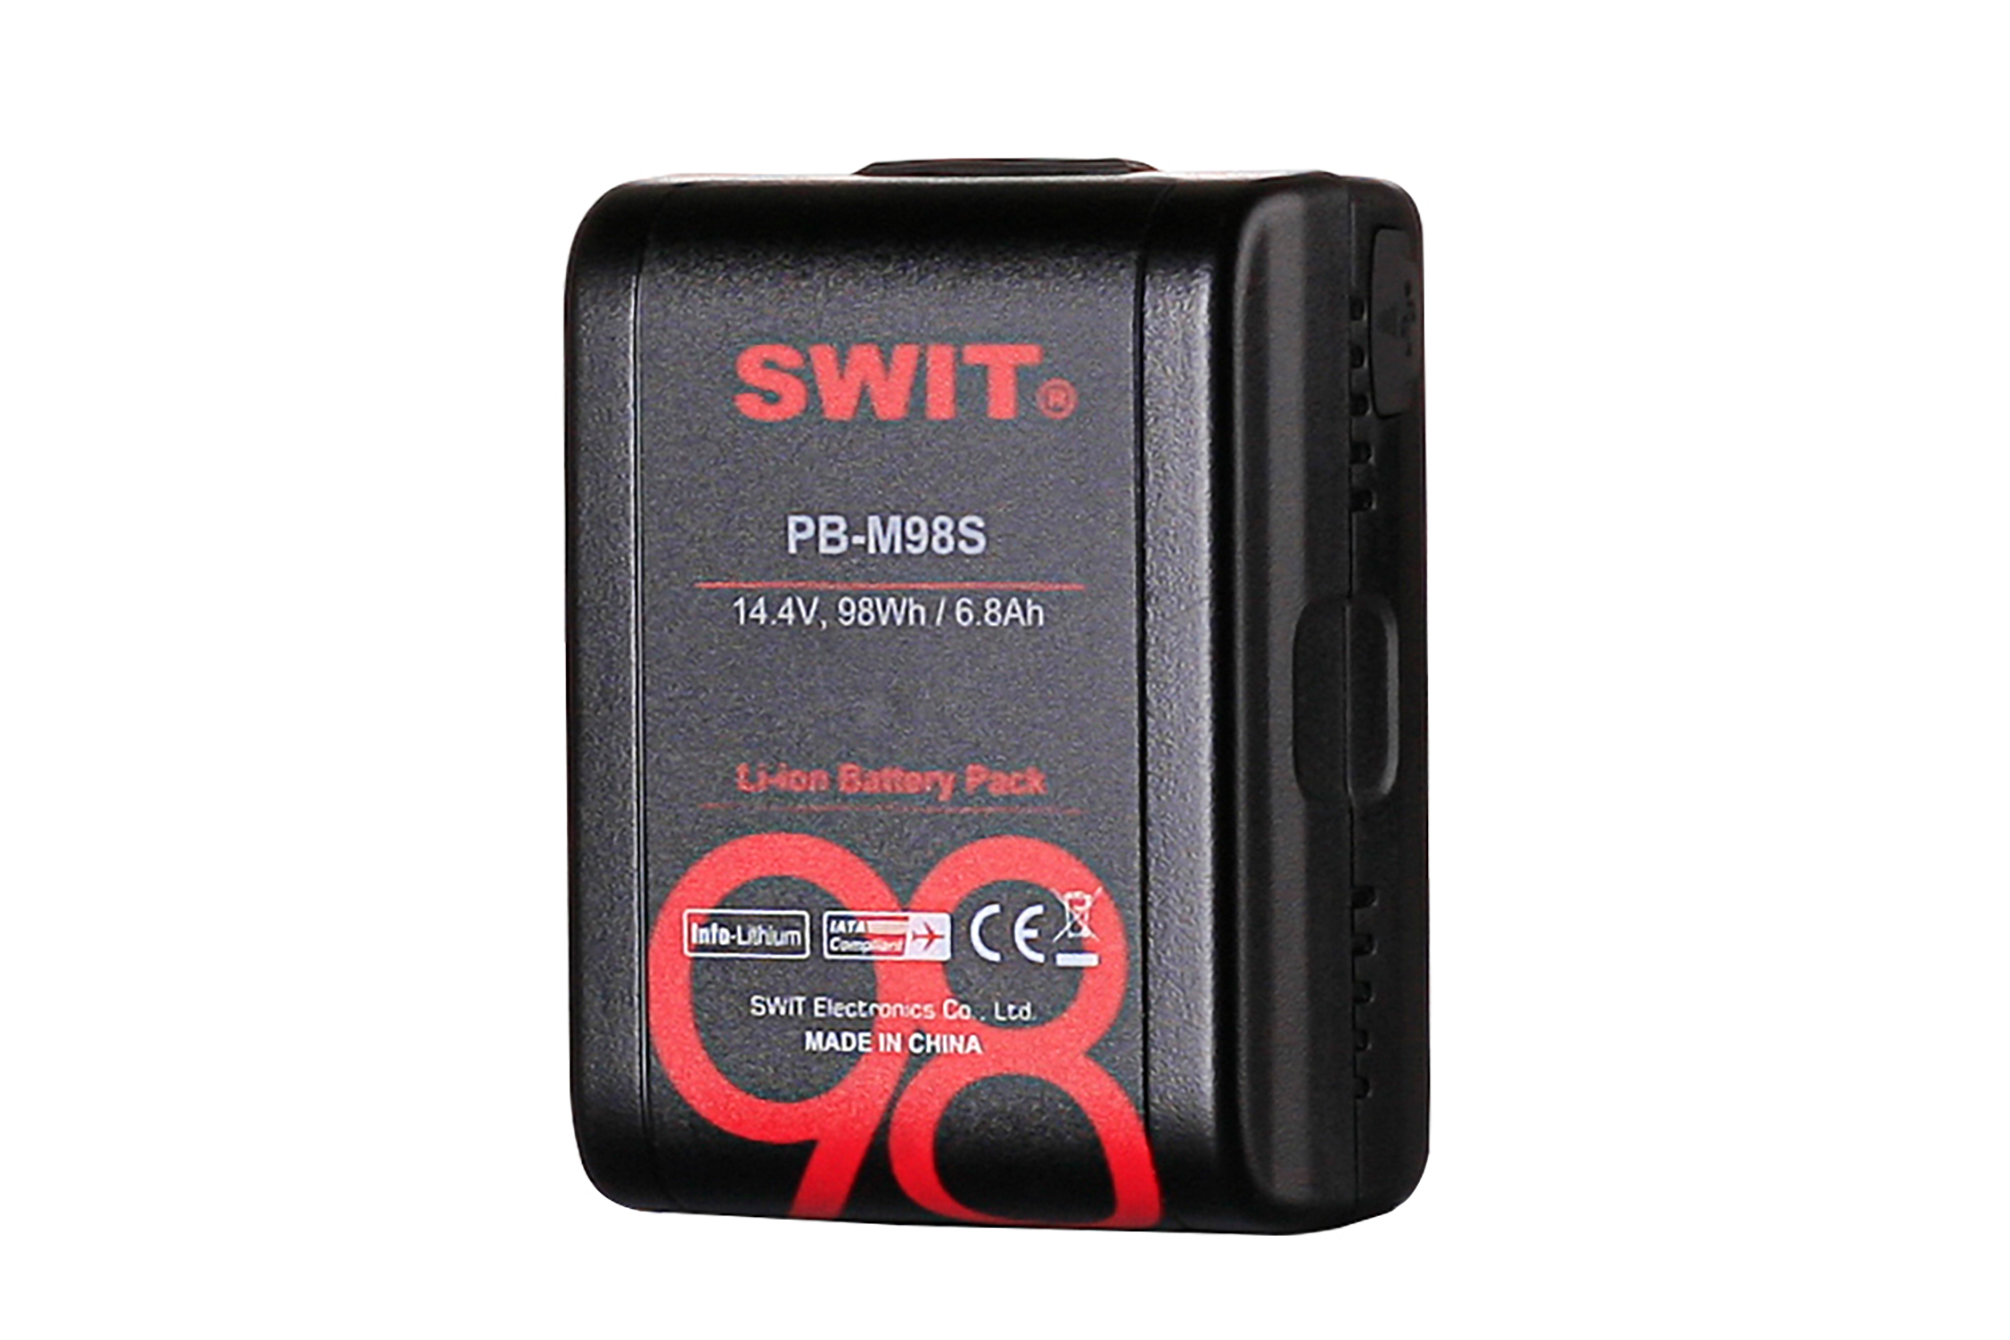 Swit PB-M98S Pocket mini Battery, 1xD-tap & 1xUSB 2A output, 98Wh, 14.4V